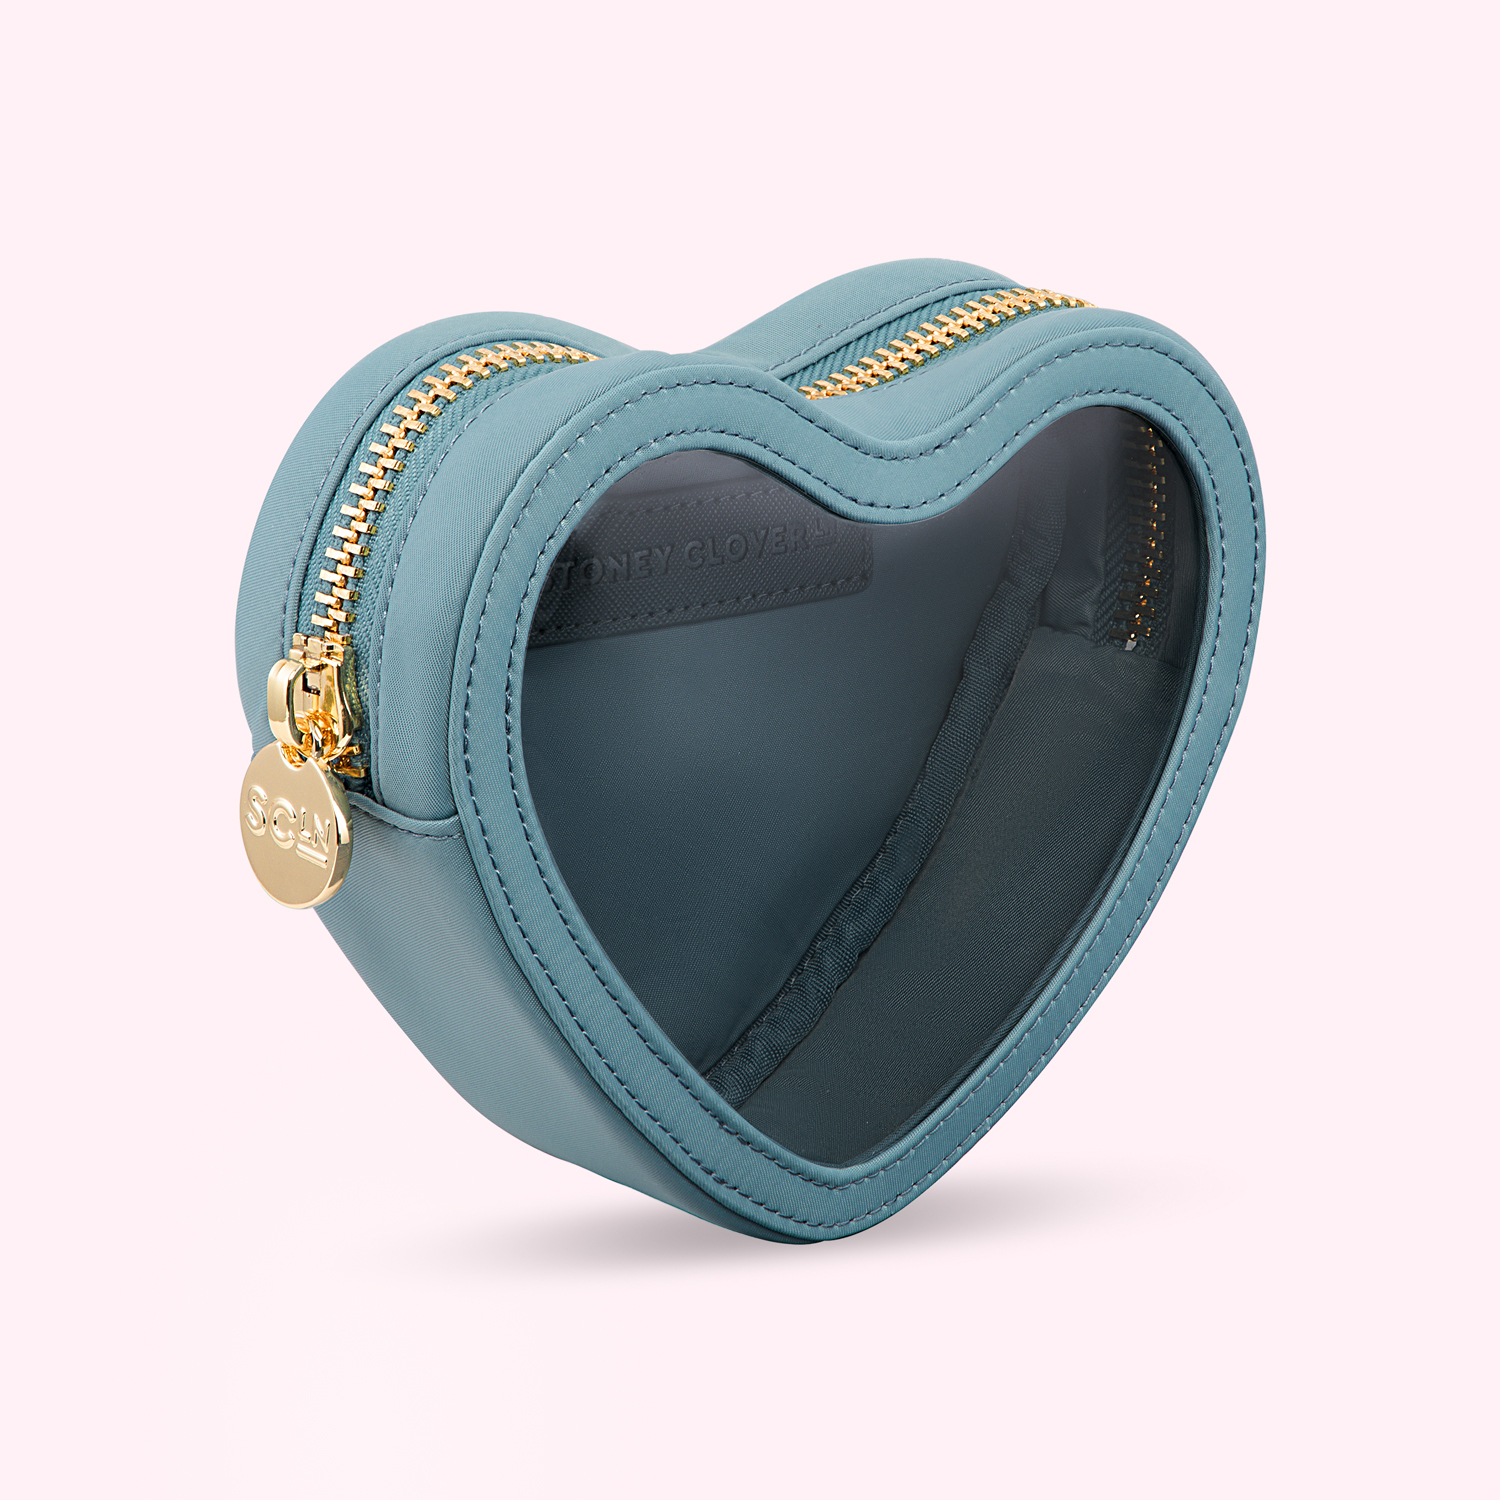 Heart Shaped Coin Purse Phone Purse Wallet Evening Clutch Purse Coin Pouch  | eBay